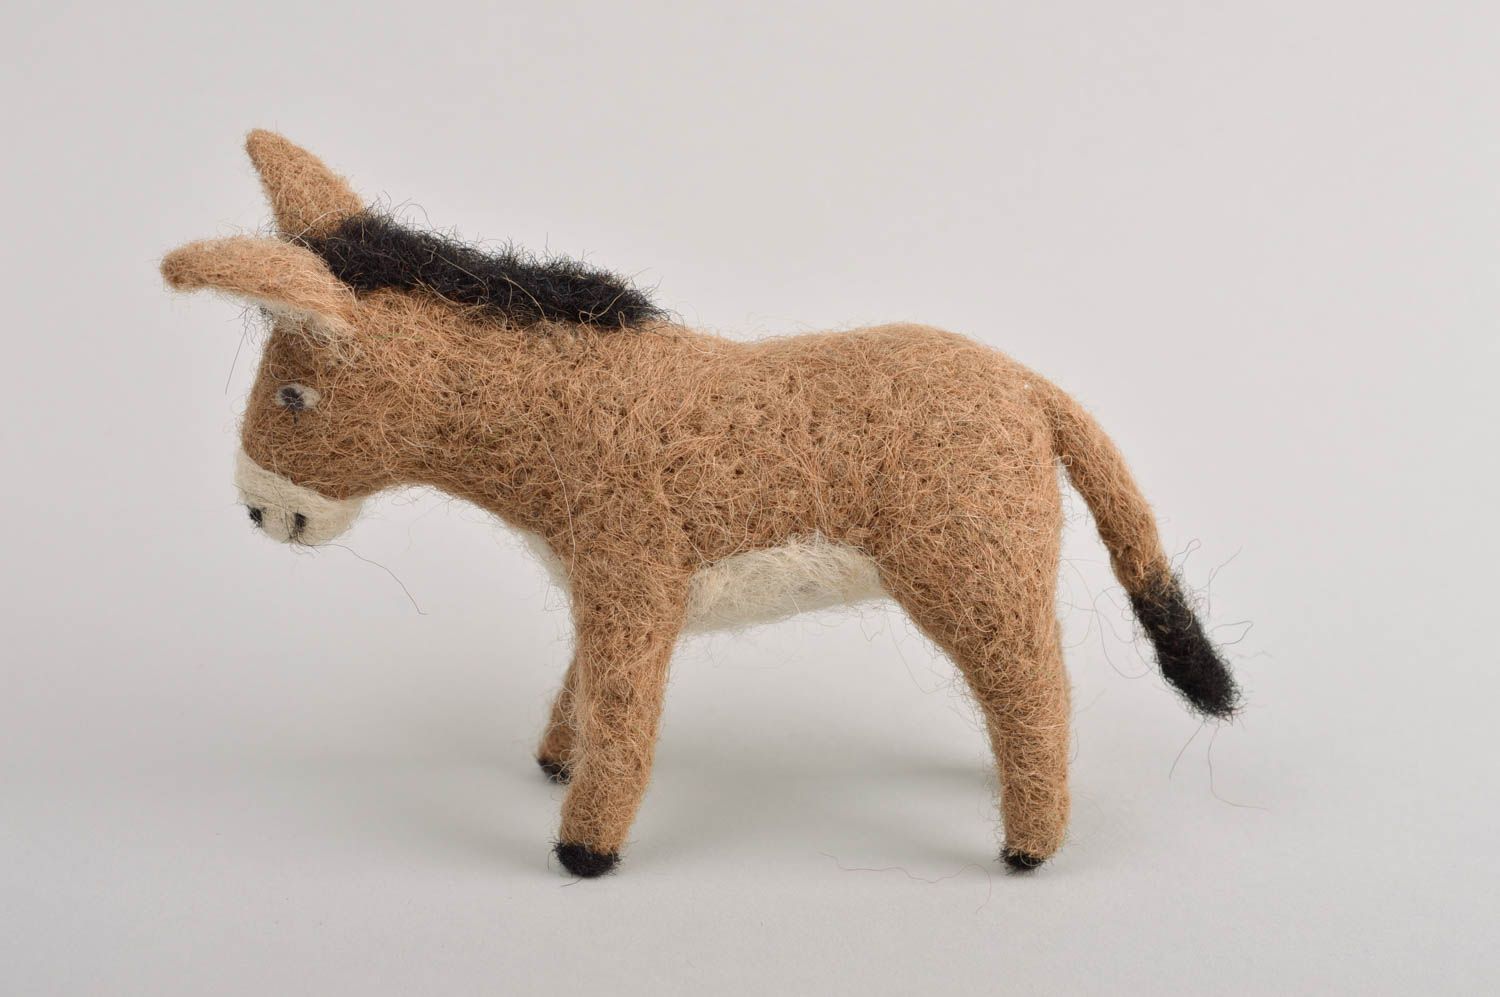 Handmade toy unusual toy woolen toy for kids interior decor ideas gift ideas photo 3